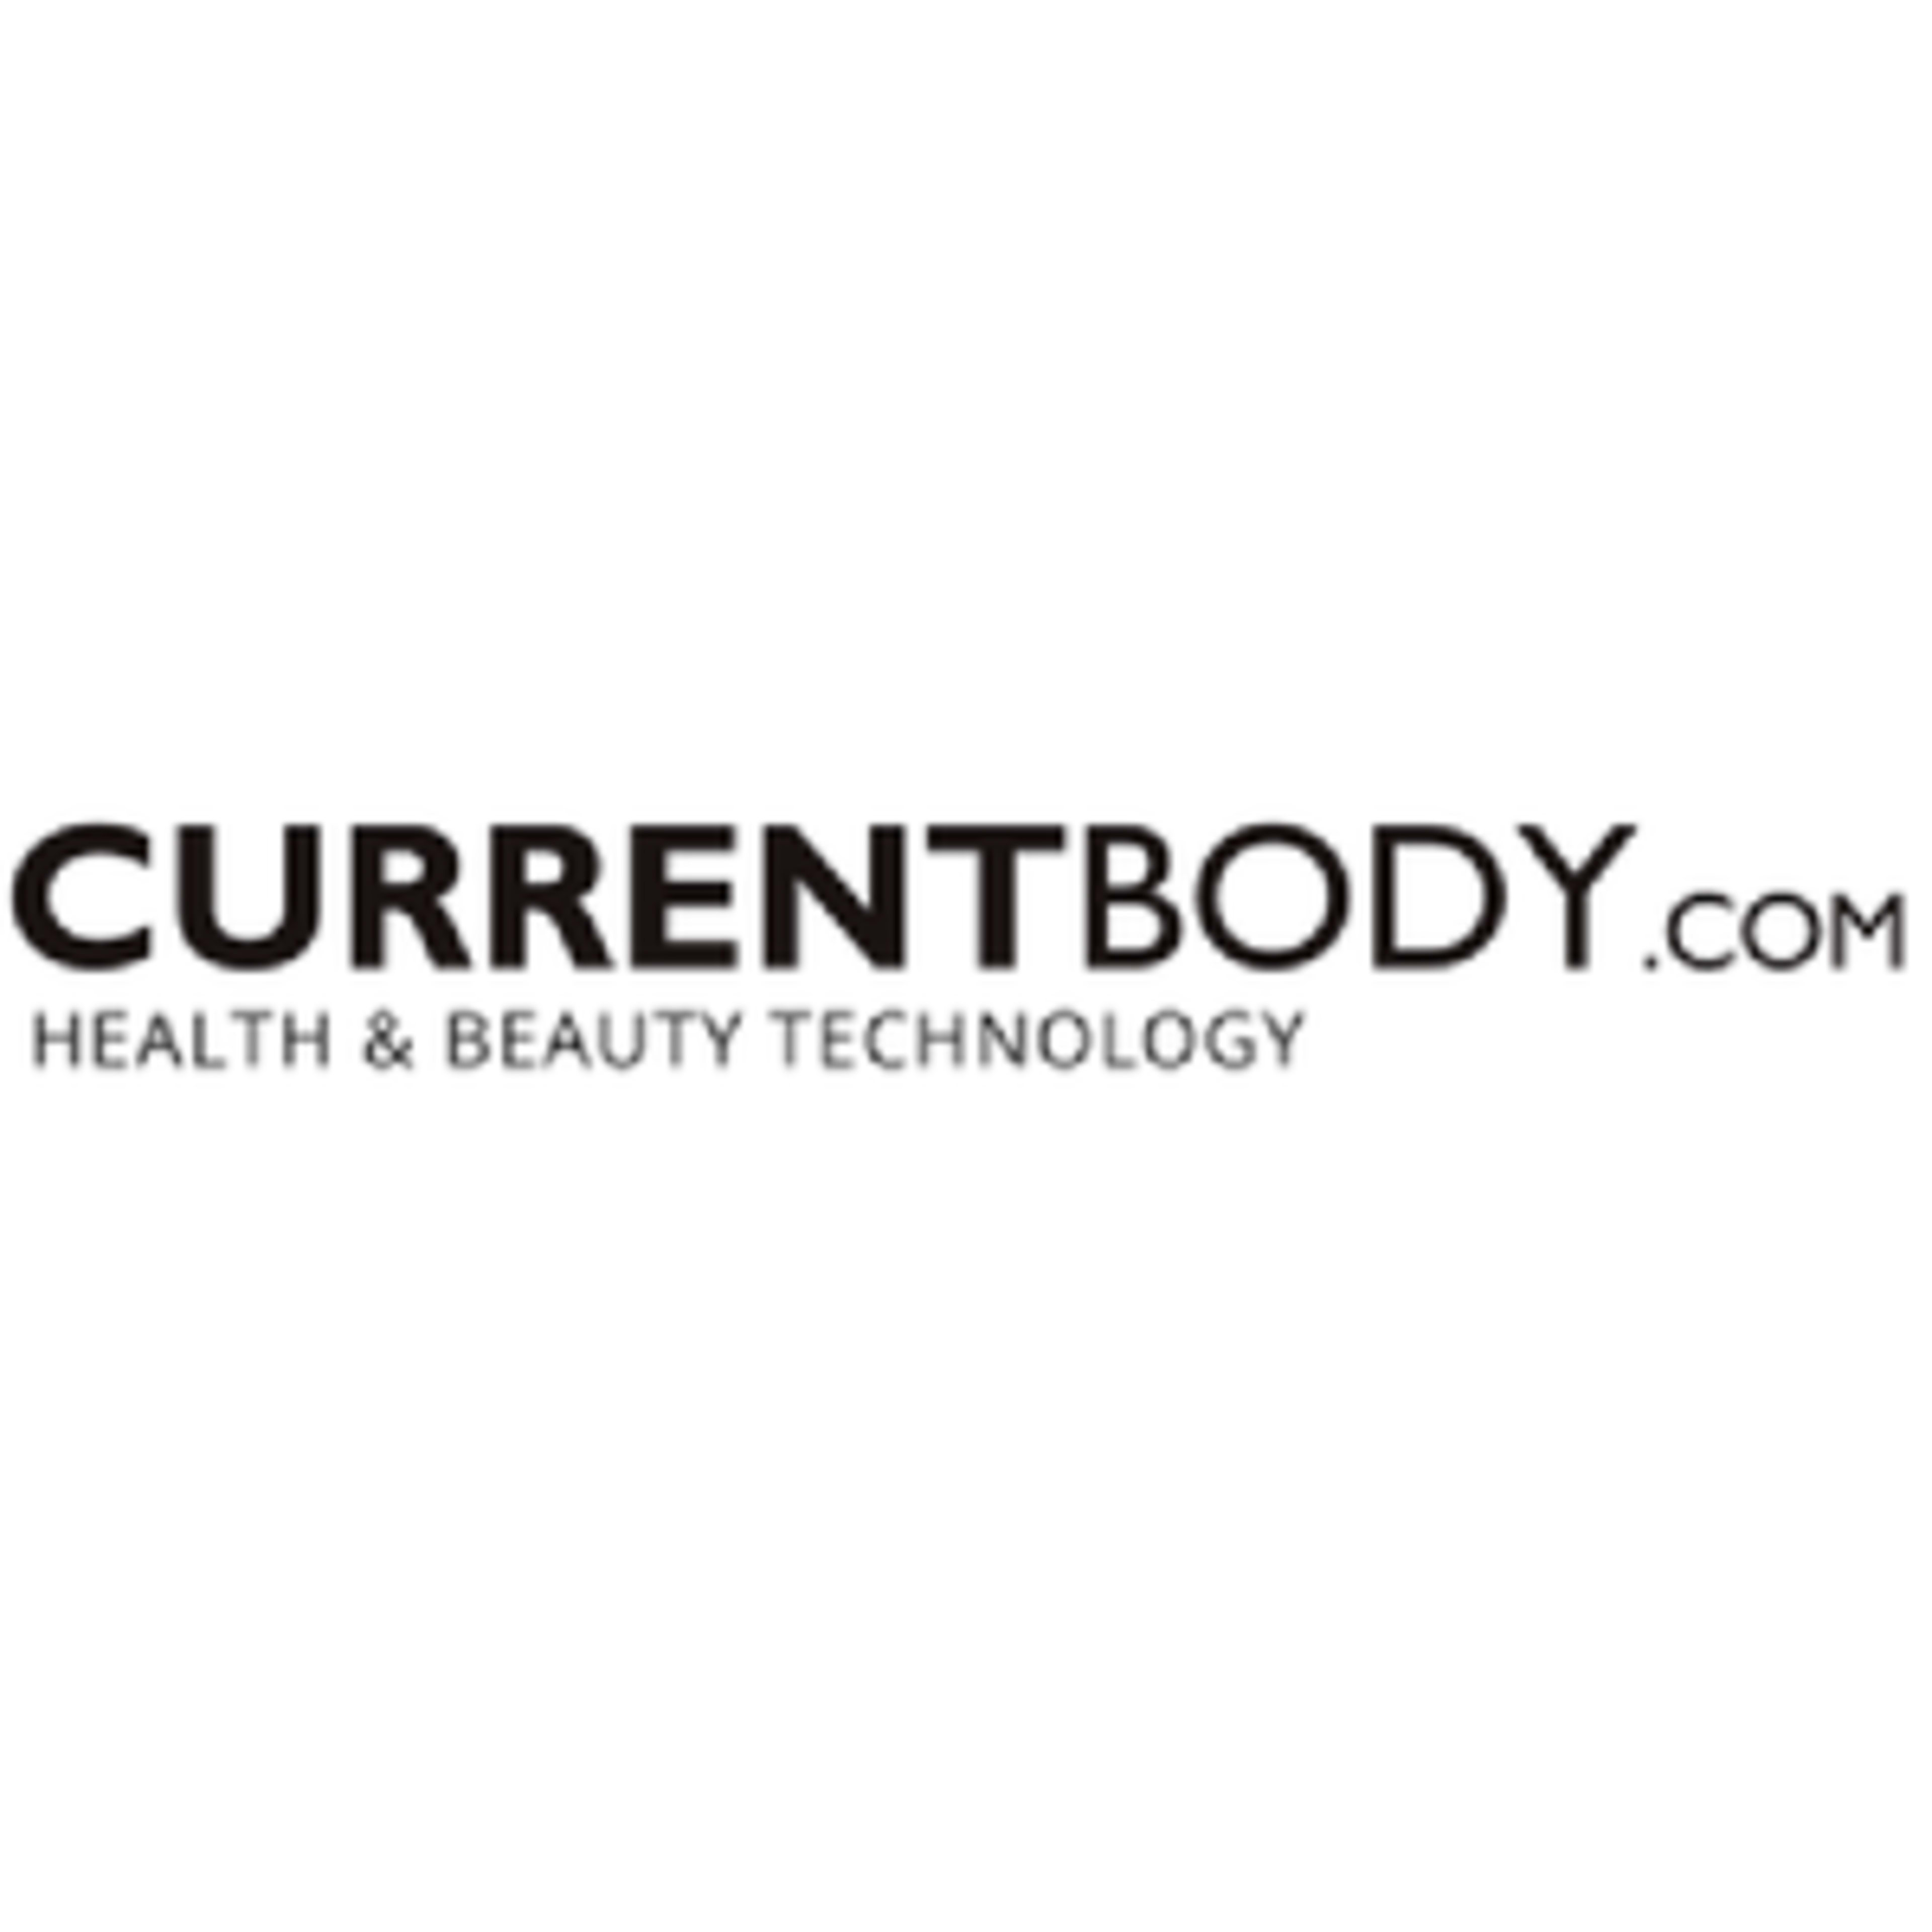 Currentbody.com Code